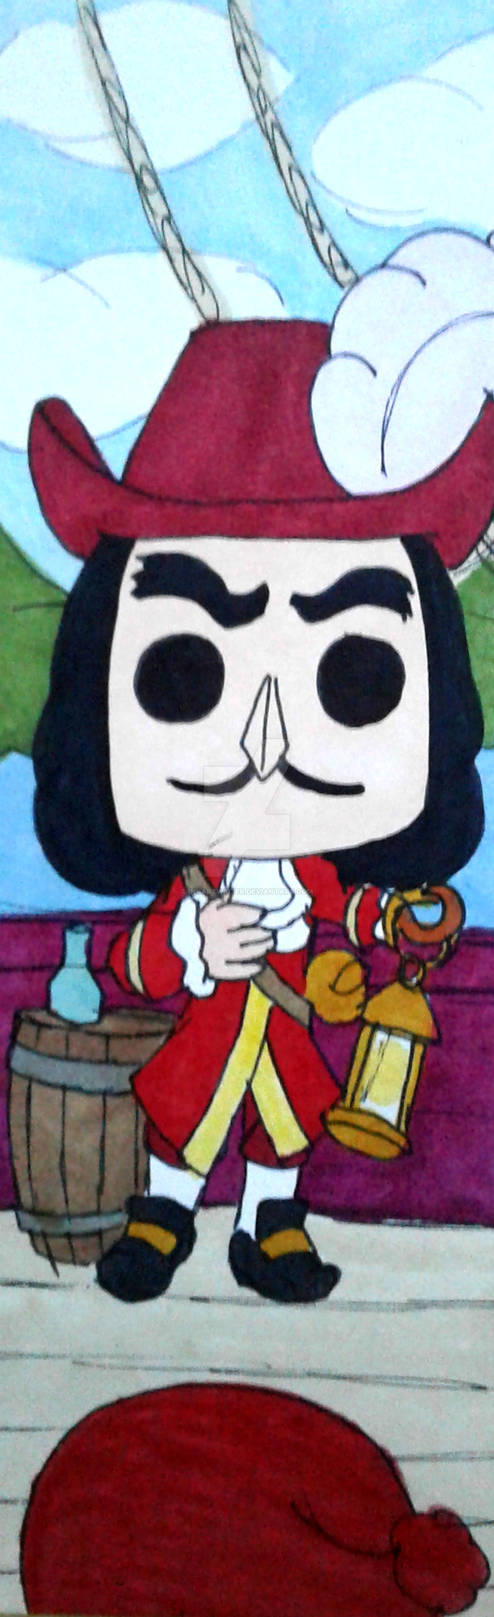 Pop Figure Bookmark - Disney Villain Captain Hook by InkArtWriter on  DeviantArt